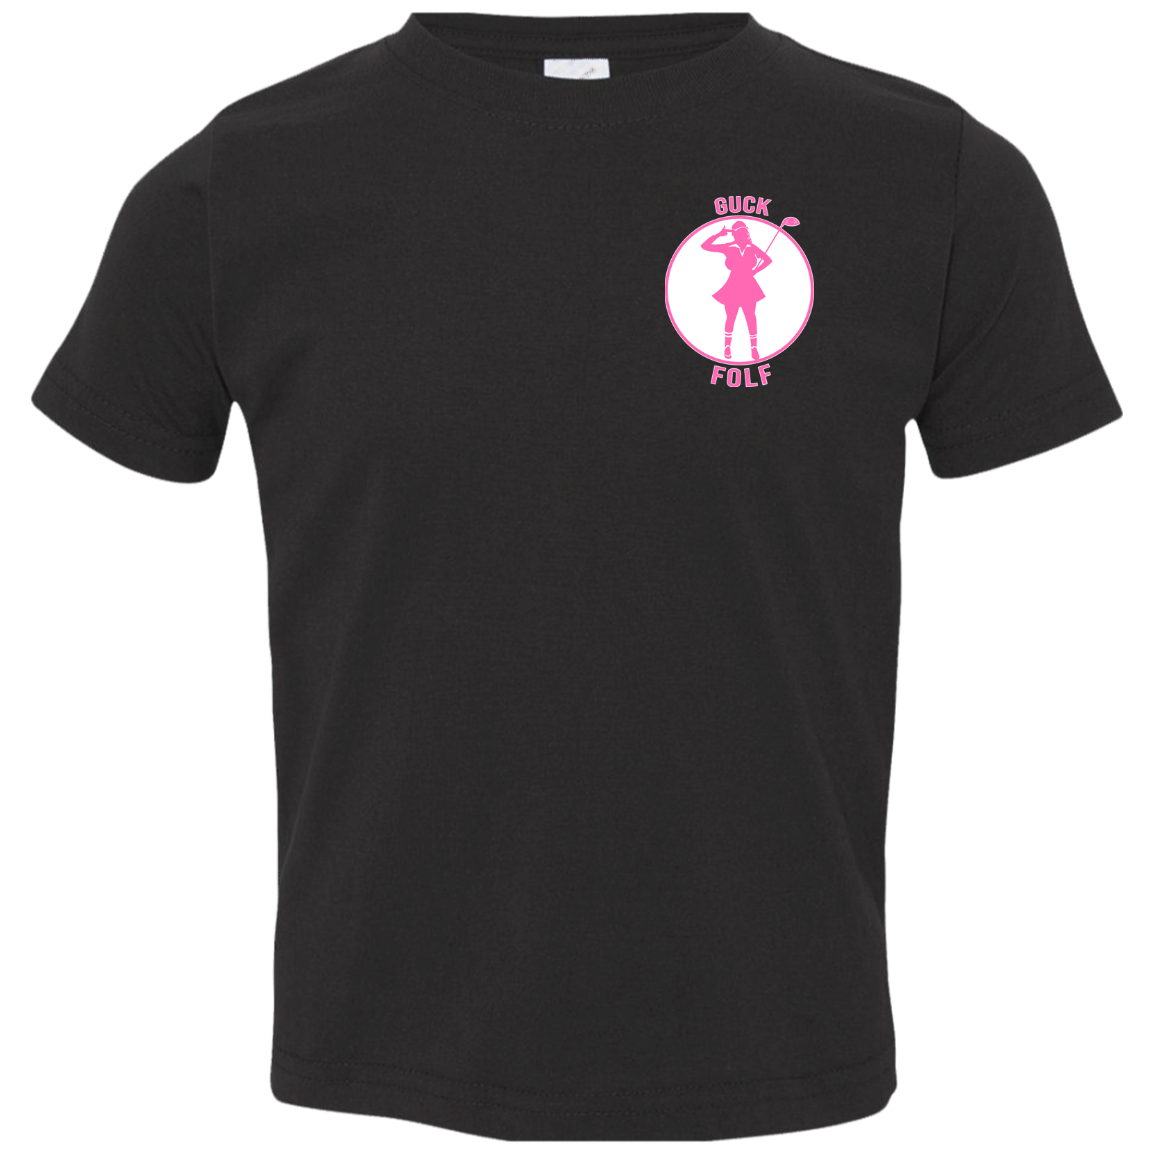 OPG Custom Design #19. GUCK FOLF. Female Edition. Toddler Jersey T-Shirt